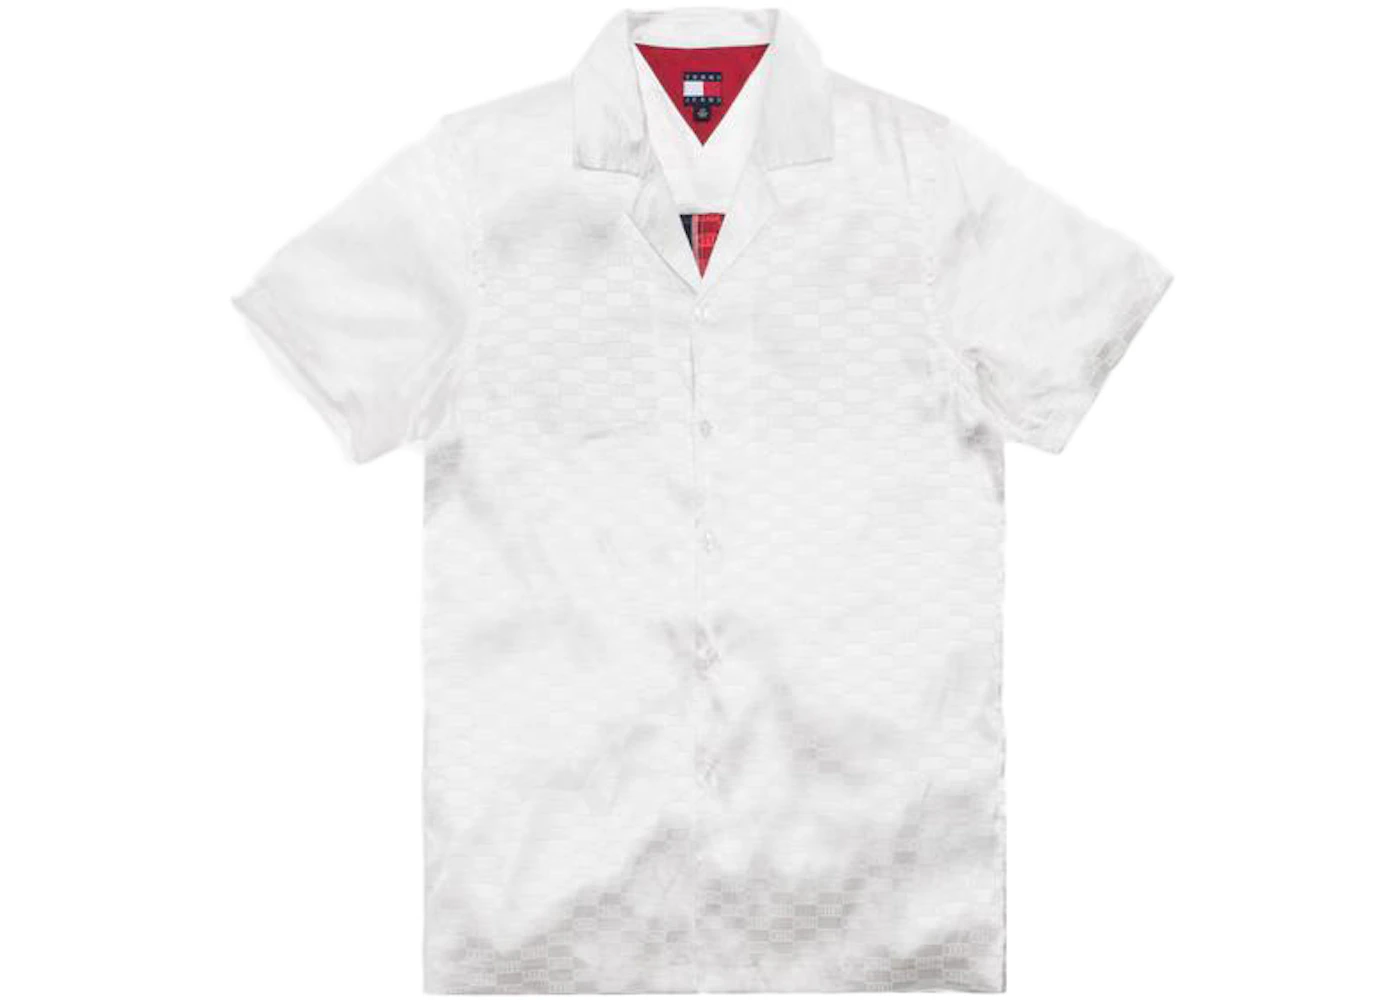 Kith x Tommy Hilfiger Satin Camp Shirt White Men's - SS19 - US